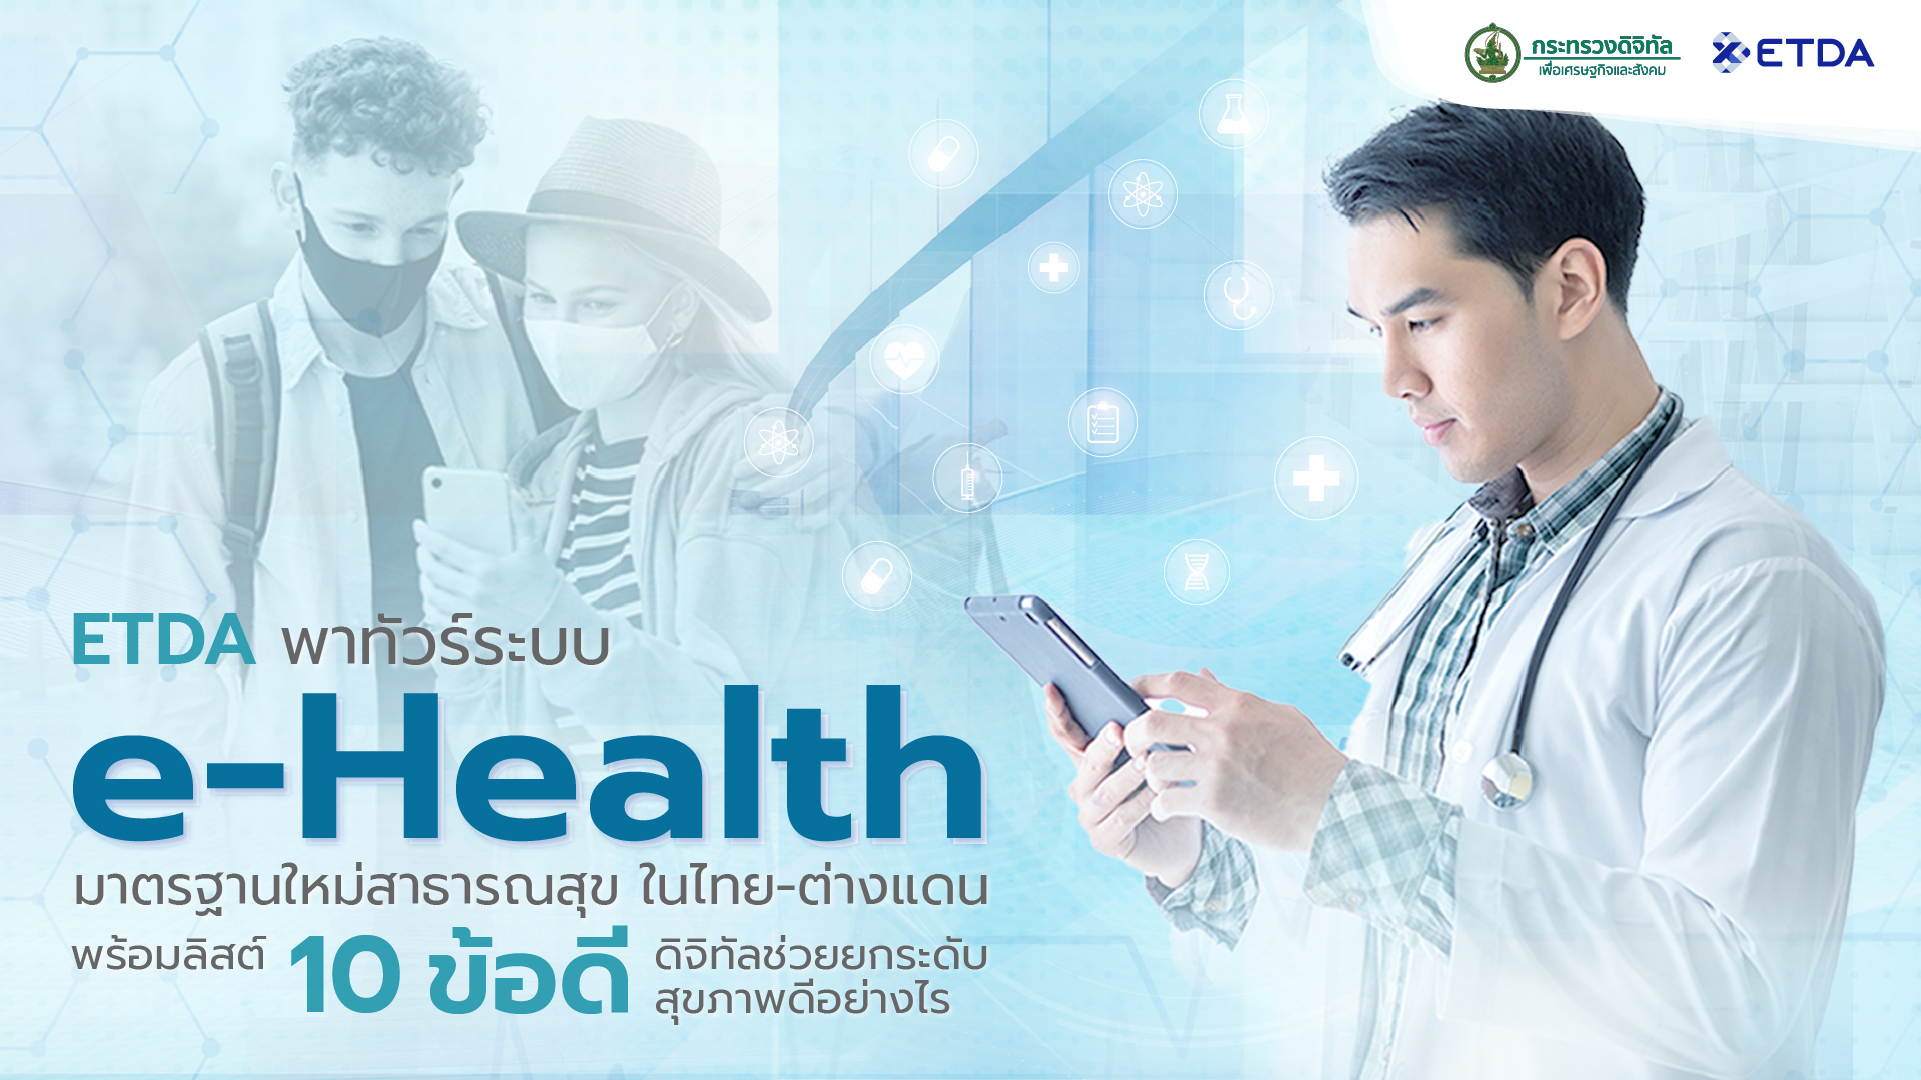 ETDA พาทัวร์ระบบ e-Health มาตรฐานใหม่สาธารณสุข ในไทย-ต่างแดน พร้อมลิสต์ 10 ข้อดี ดิจิทัลช่วยยกระดับส